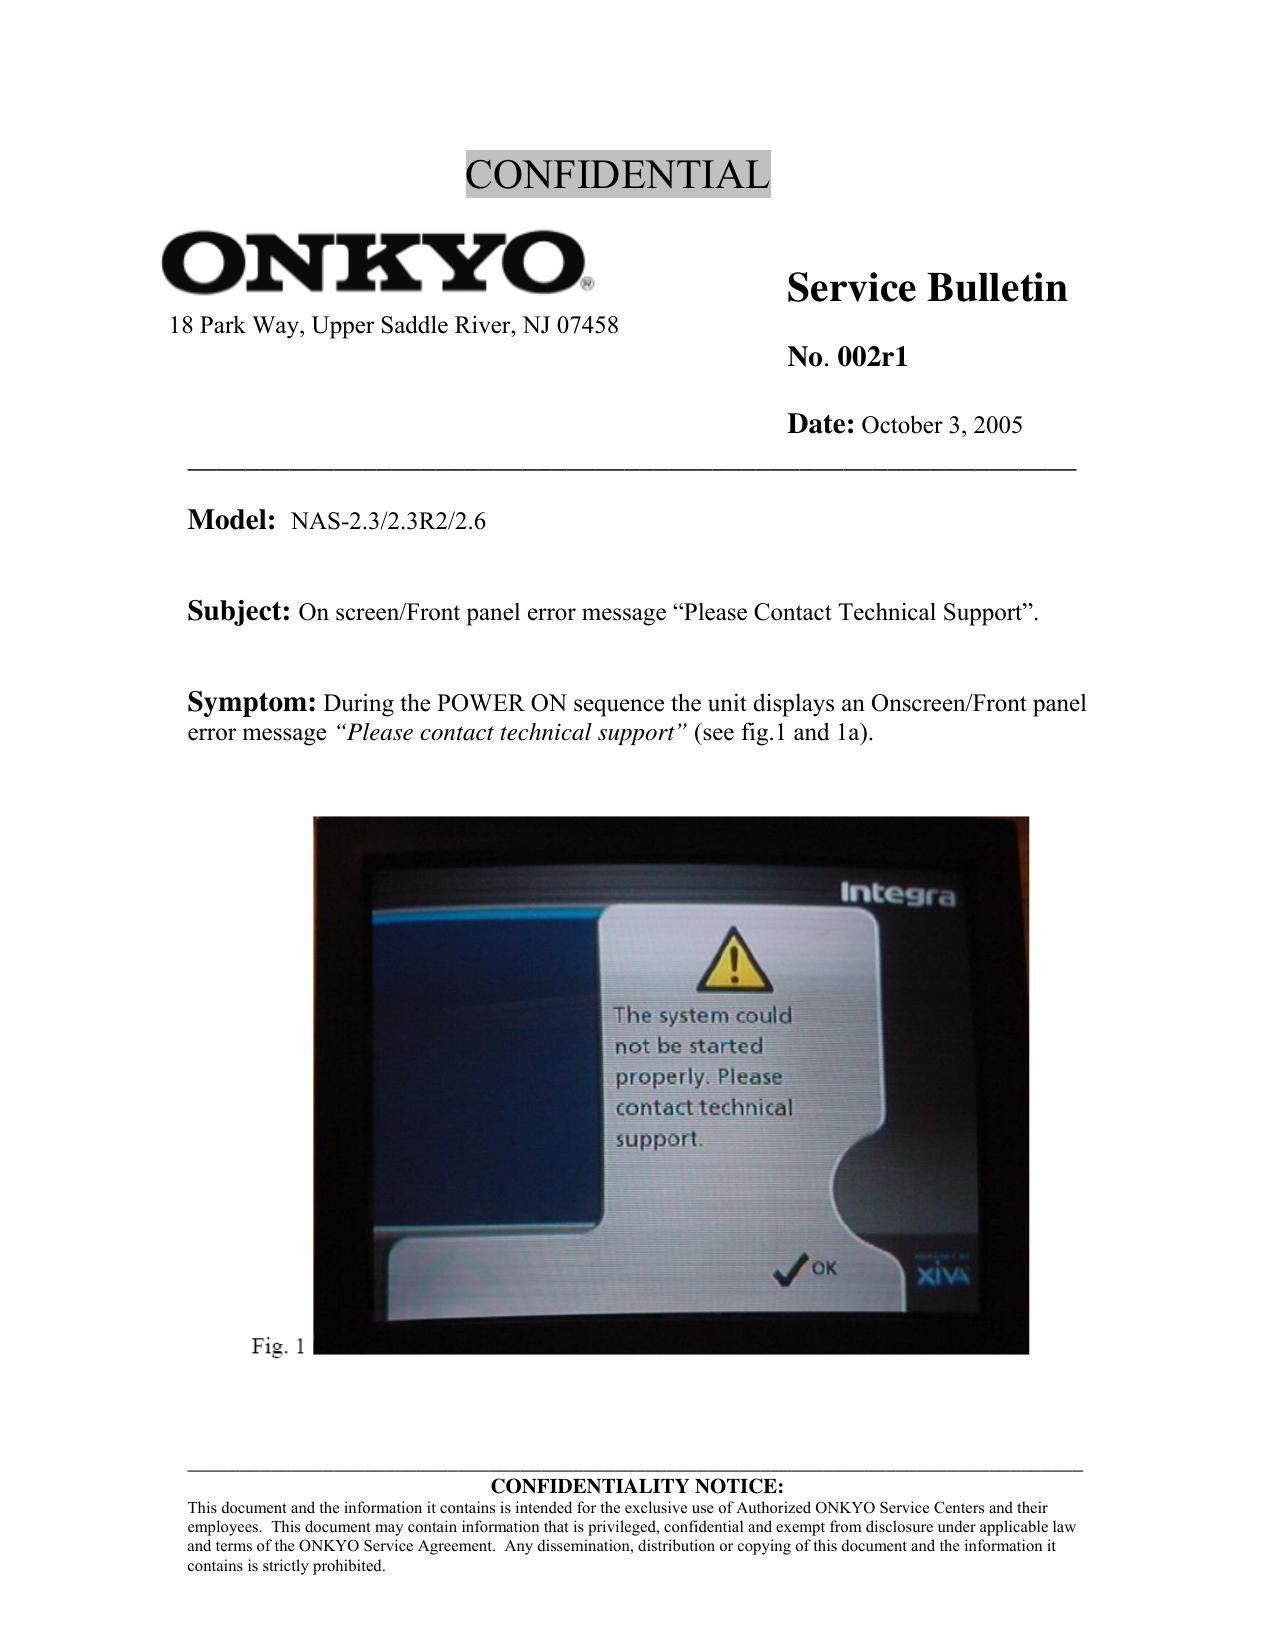 Onkyo NAS 2.X Service Manual